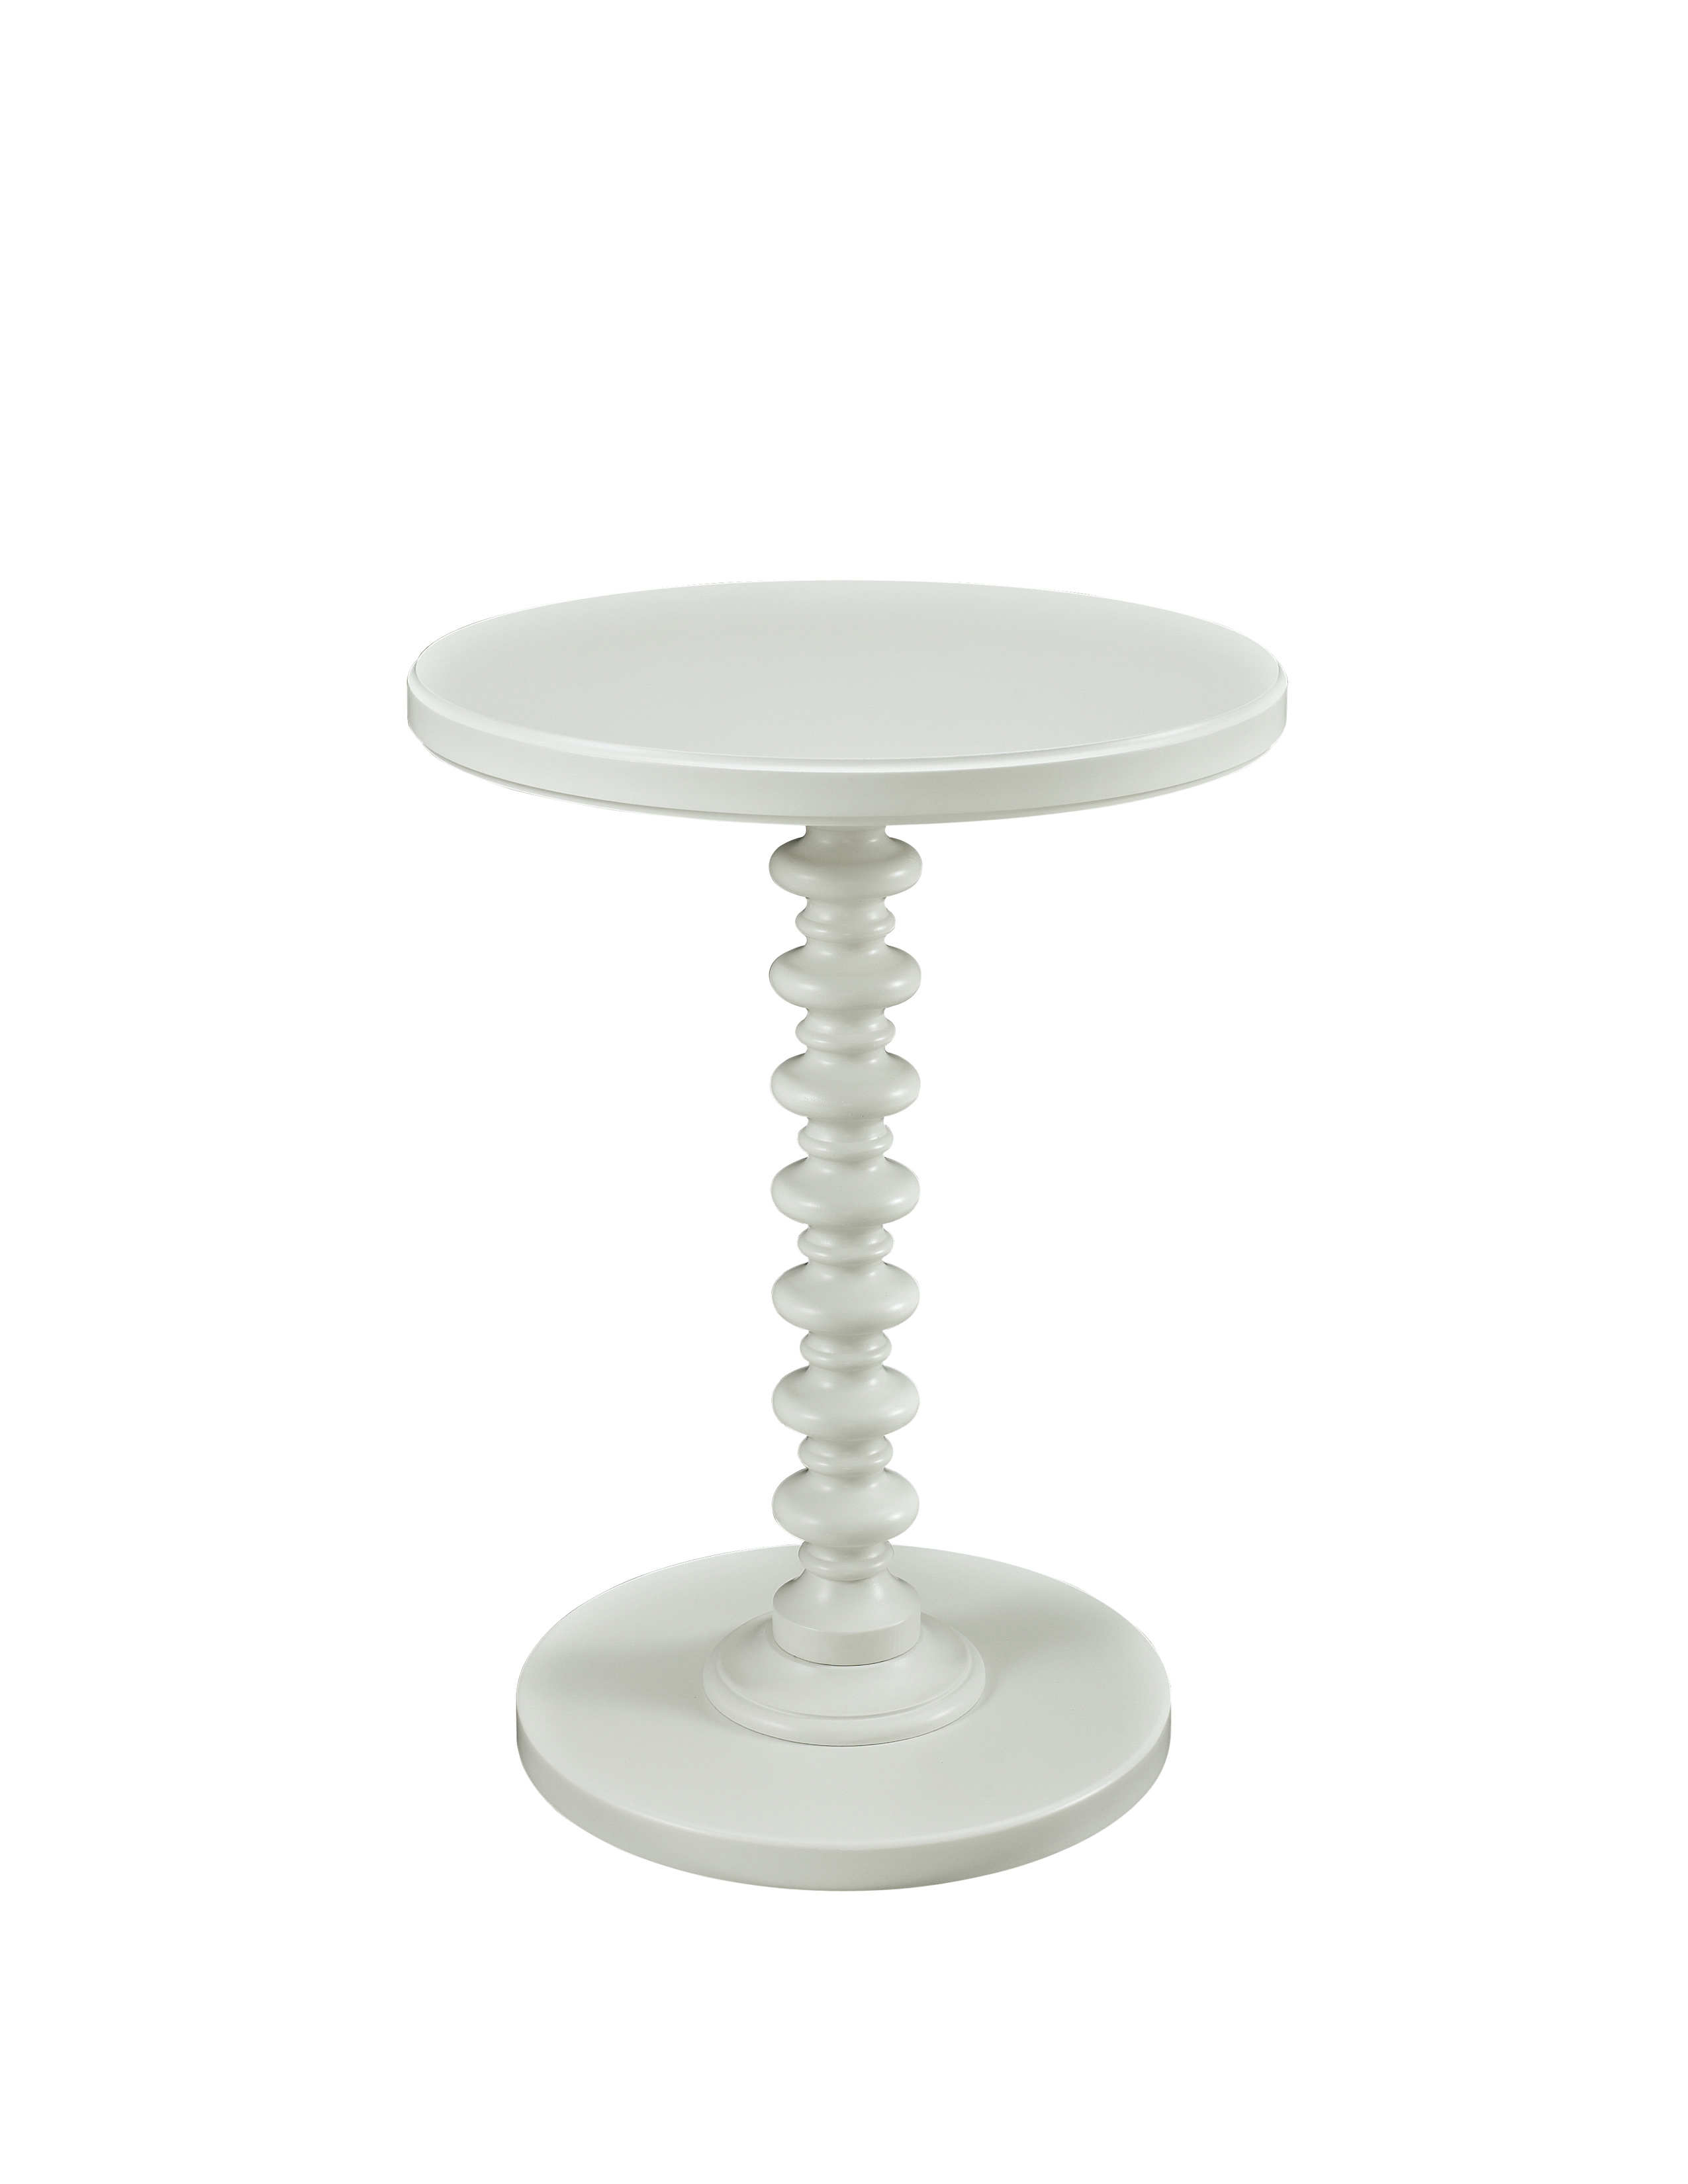 Furnituremaxx White Round Spindle Pedestal Table